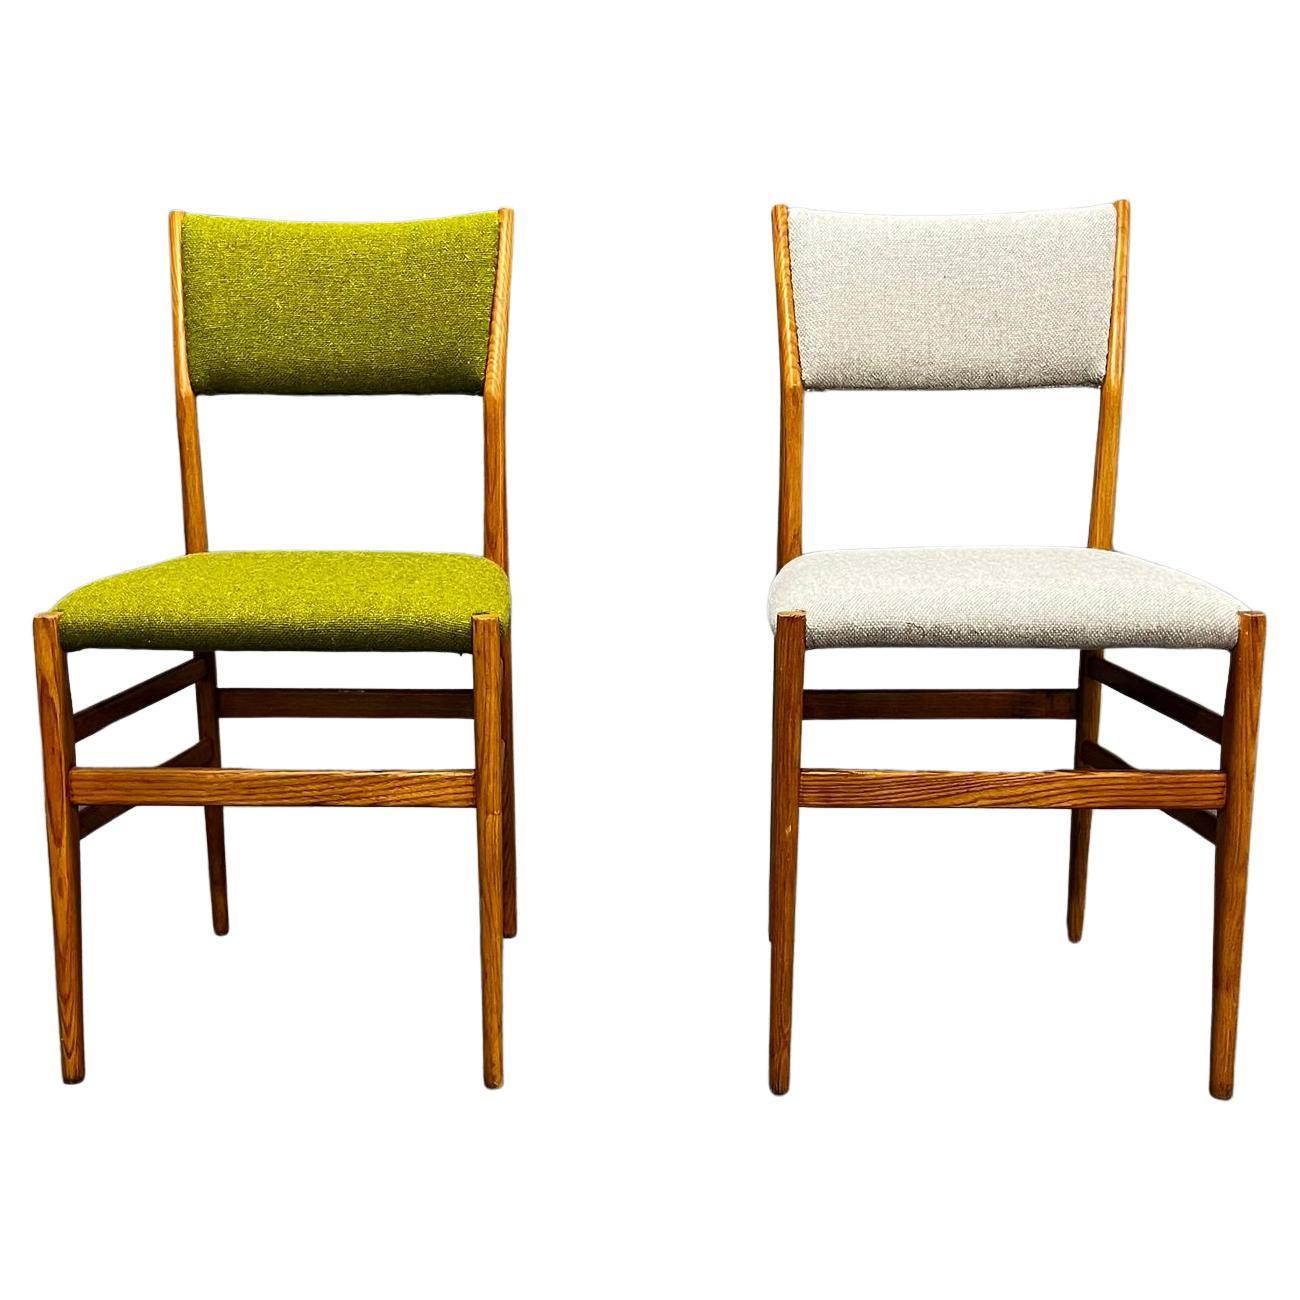 Gio Ponti for Cassina, Leggera Chair, Model 646, 1950s  